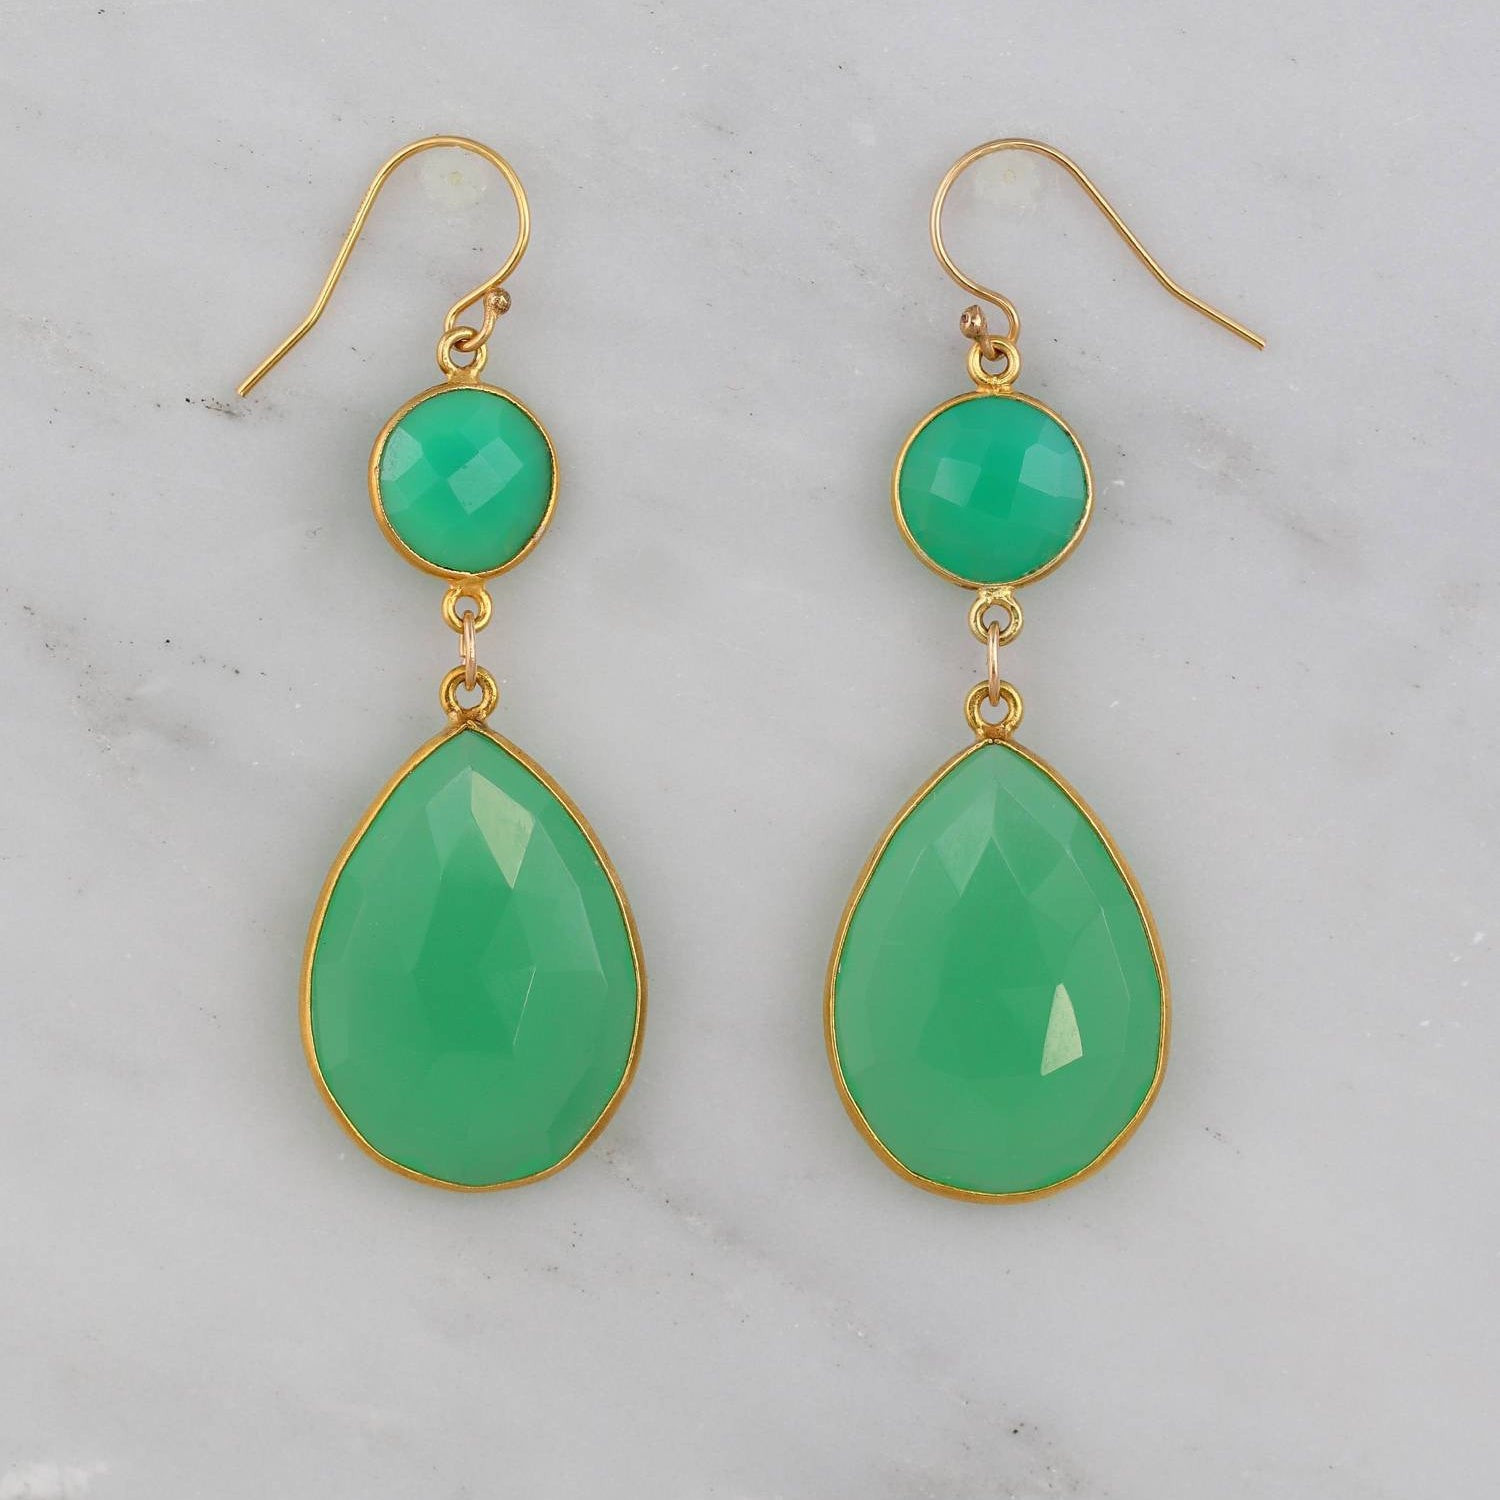 Chrysoprase Earring, Two Tier Earring, Green Gemstone Earring, Gold filled wires Earring, Large Gemstone Earring, Elegant Statement Earring